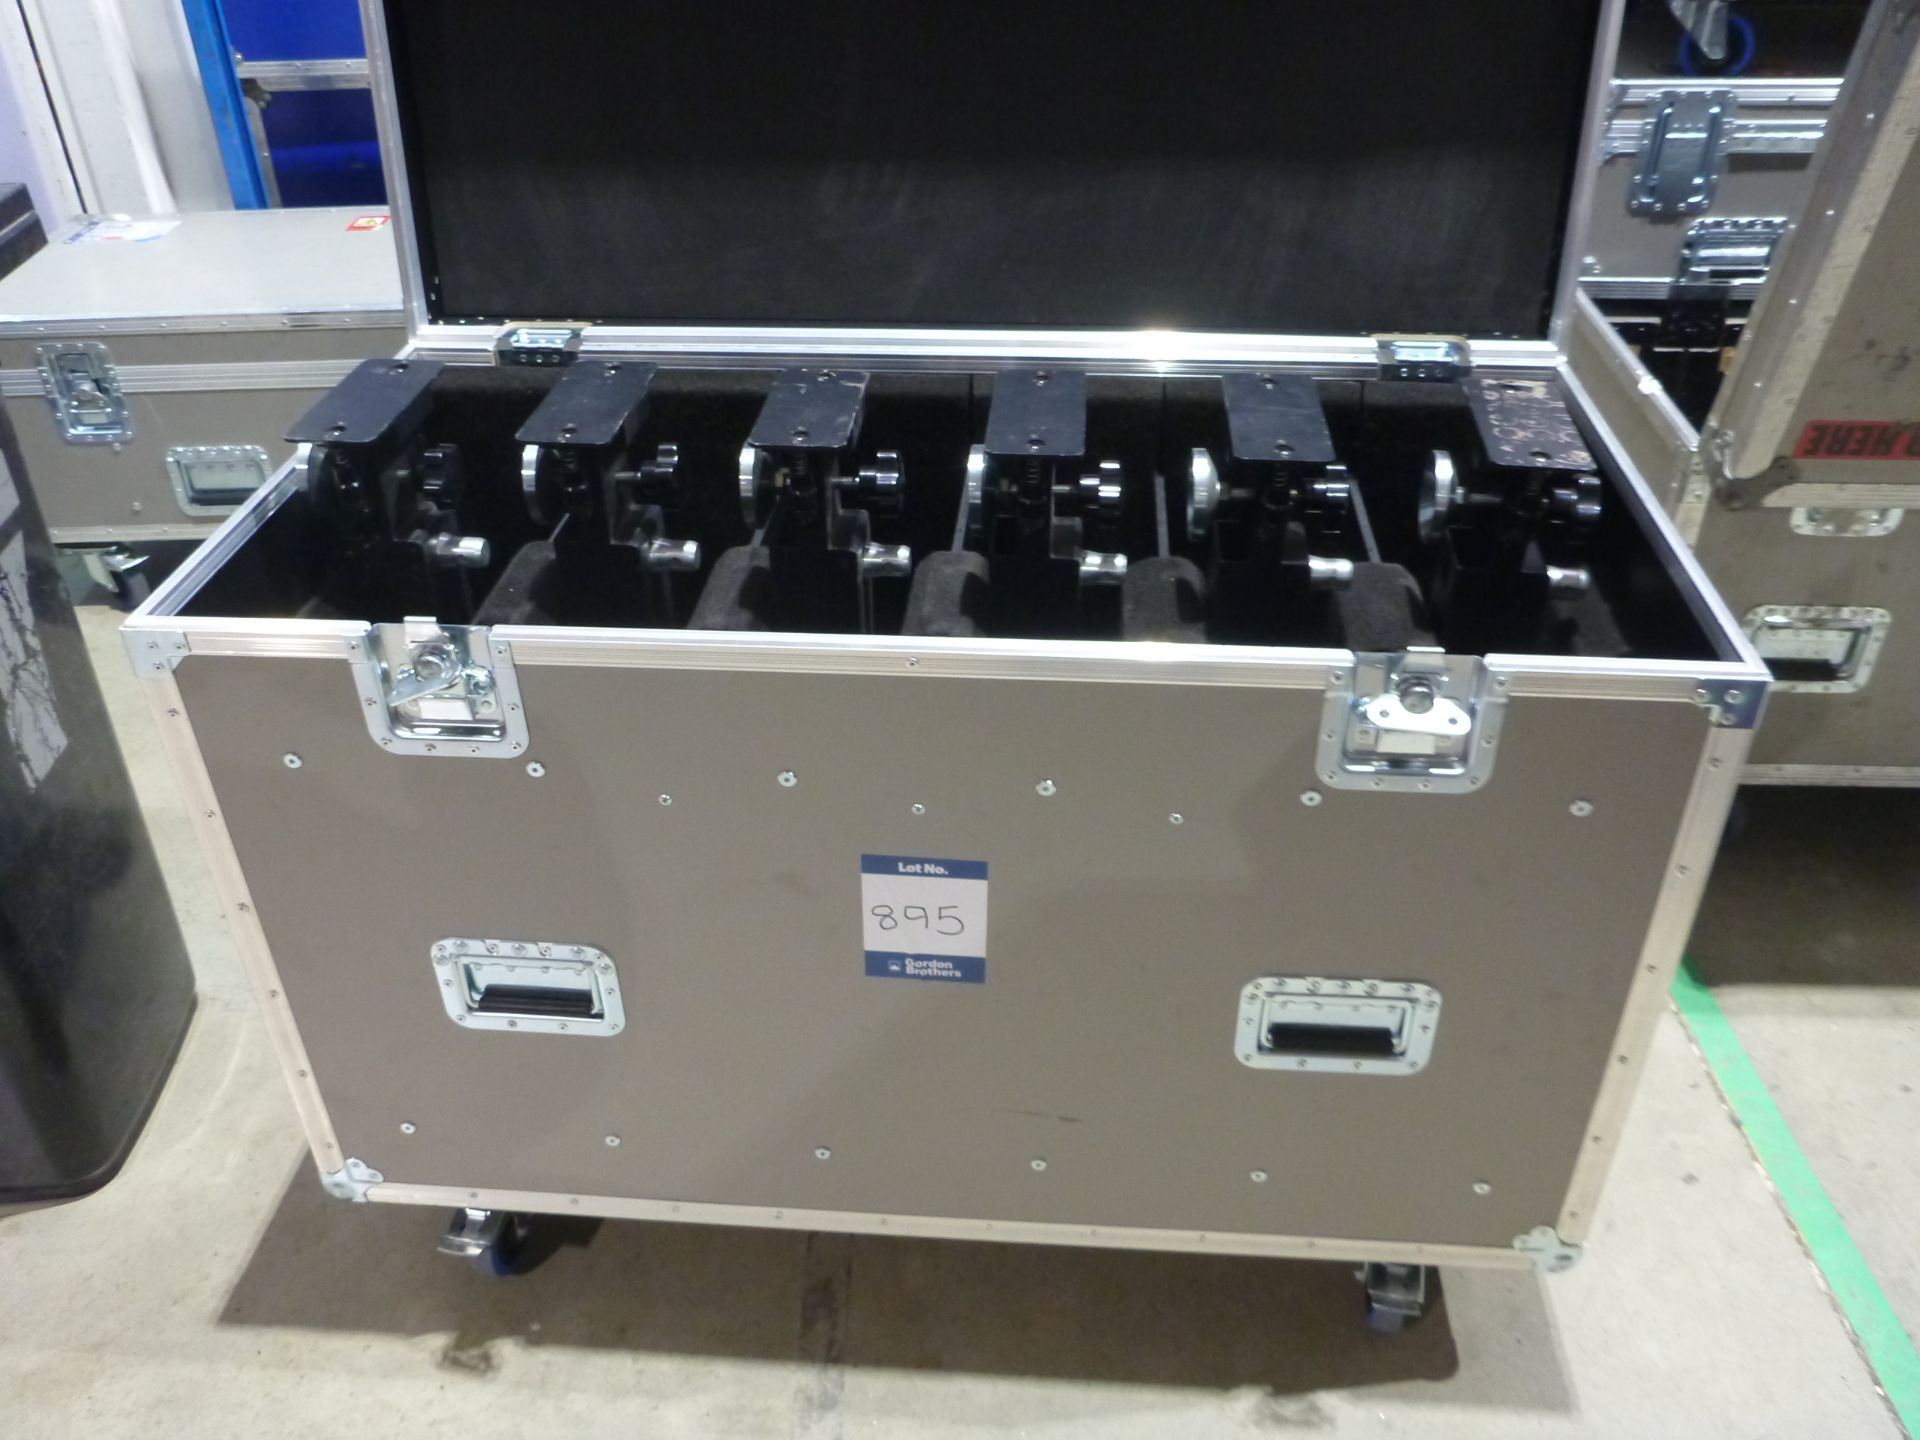 DigiLED X-Tek 2600i Ground Beam Support Kit, 500 mm single panel, Qty 6 in flight case